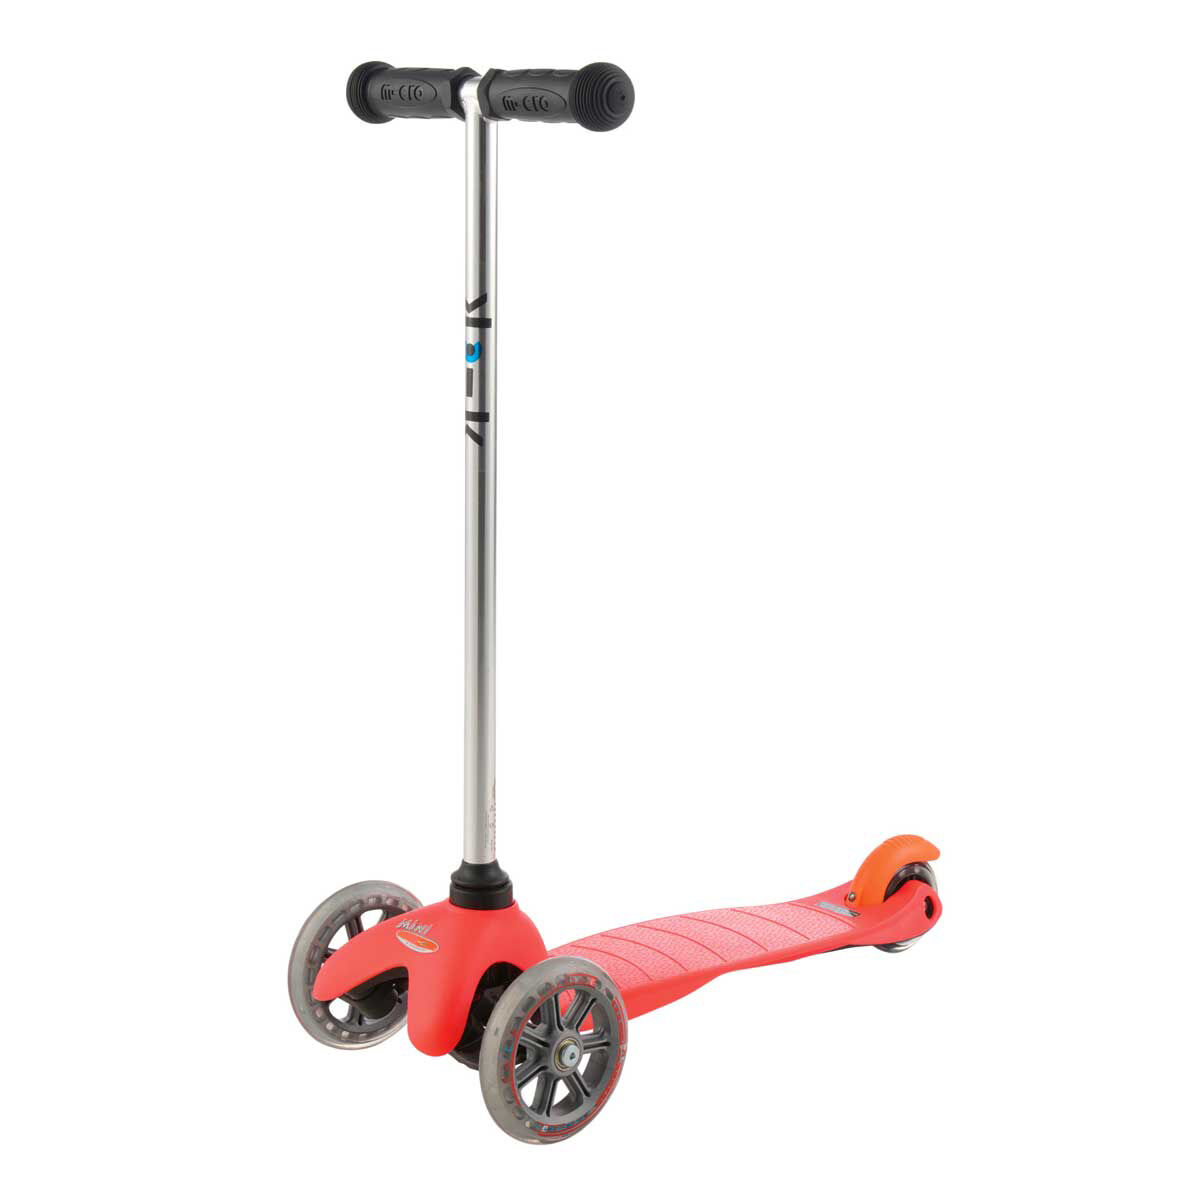 mini scooter